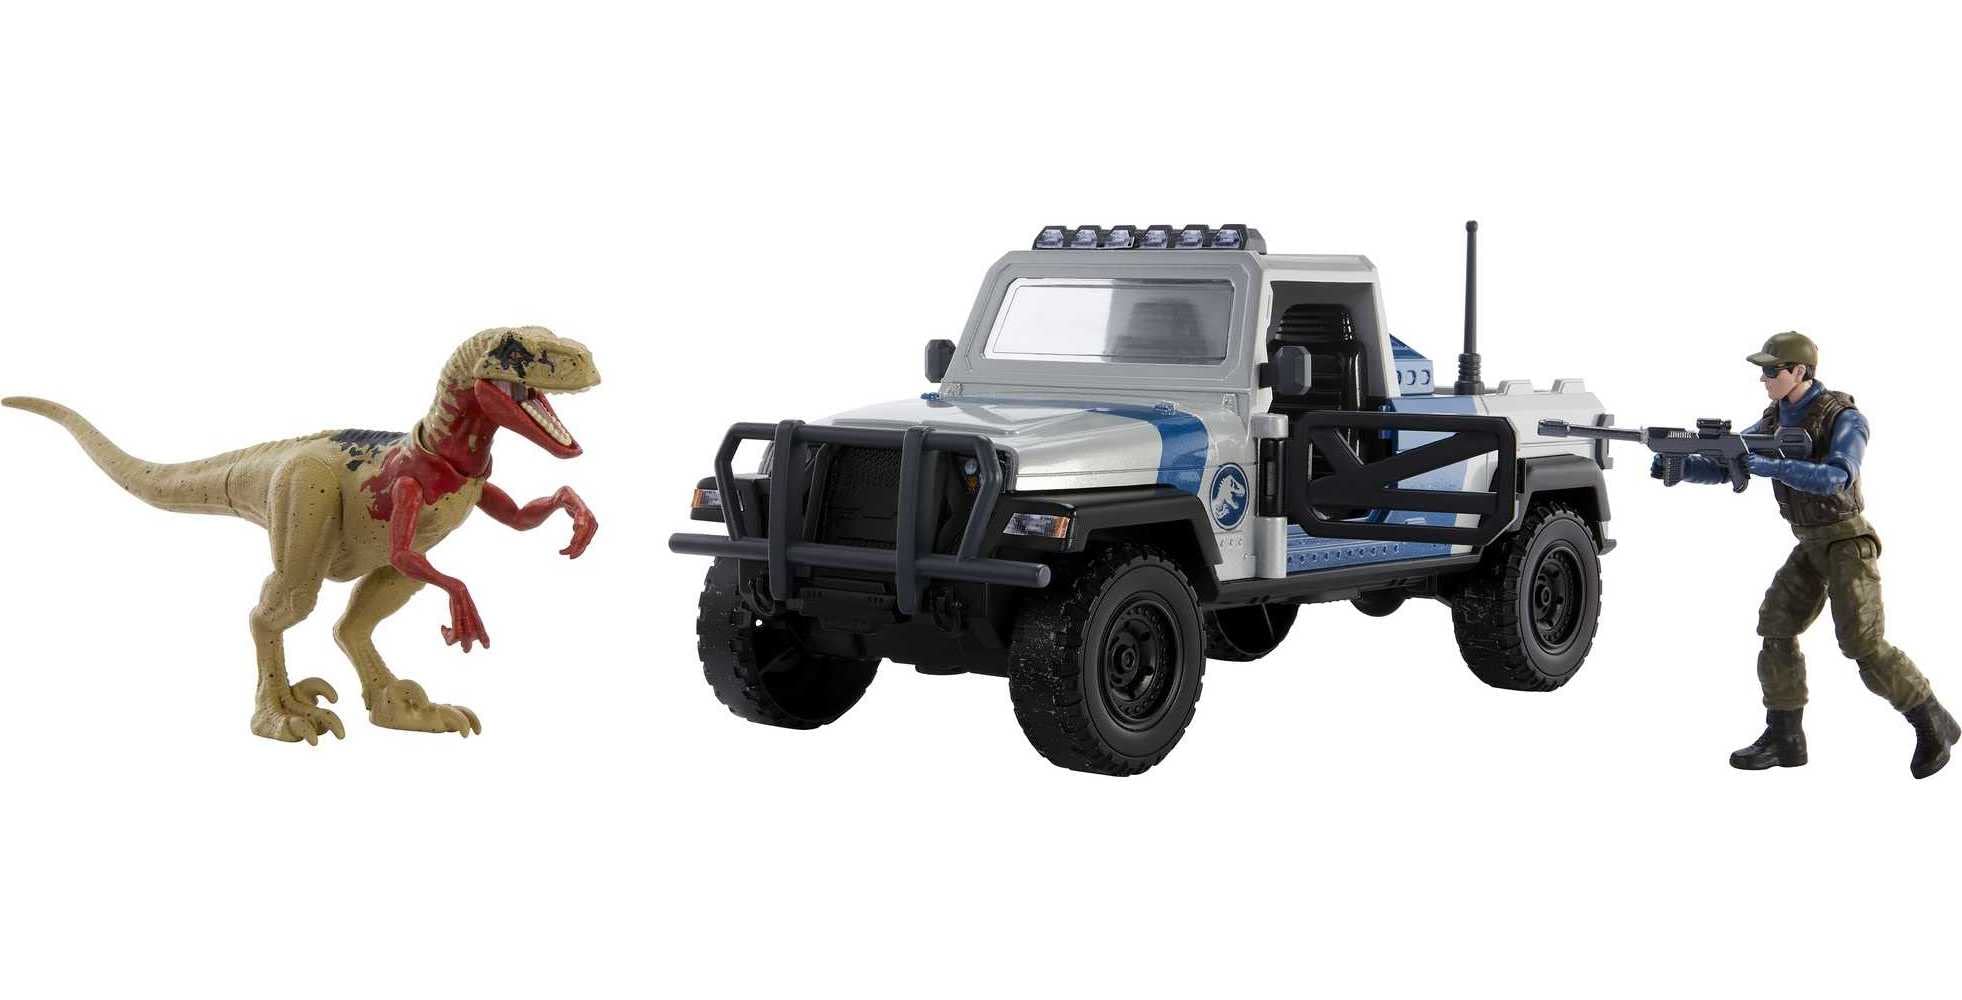 Mattel Jurassic World Truck Set, Atrociraptor Dinosaur & Human Figure, Movie Vehicle with Destruct Smash Area, Toy with Connected Digital Play